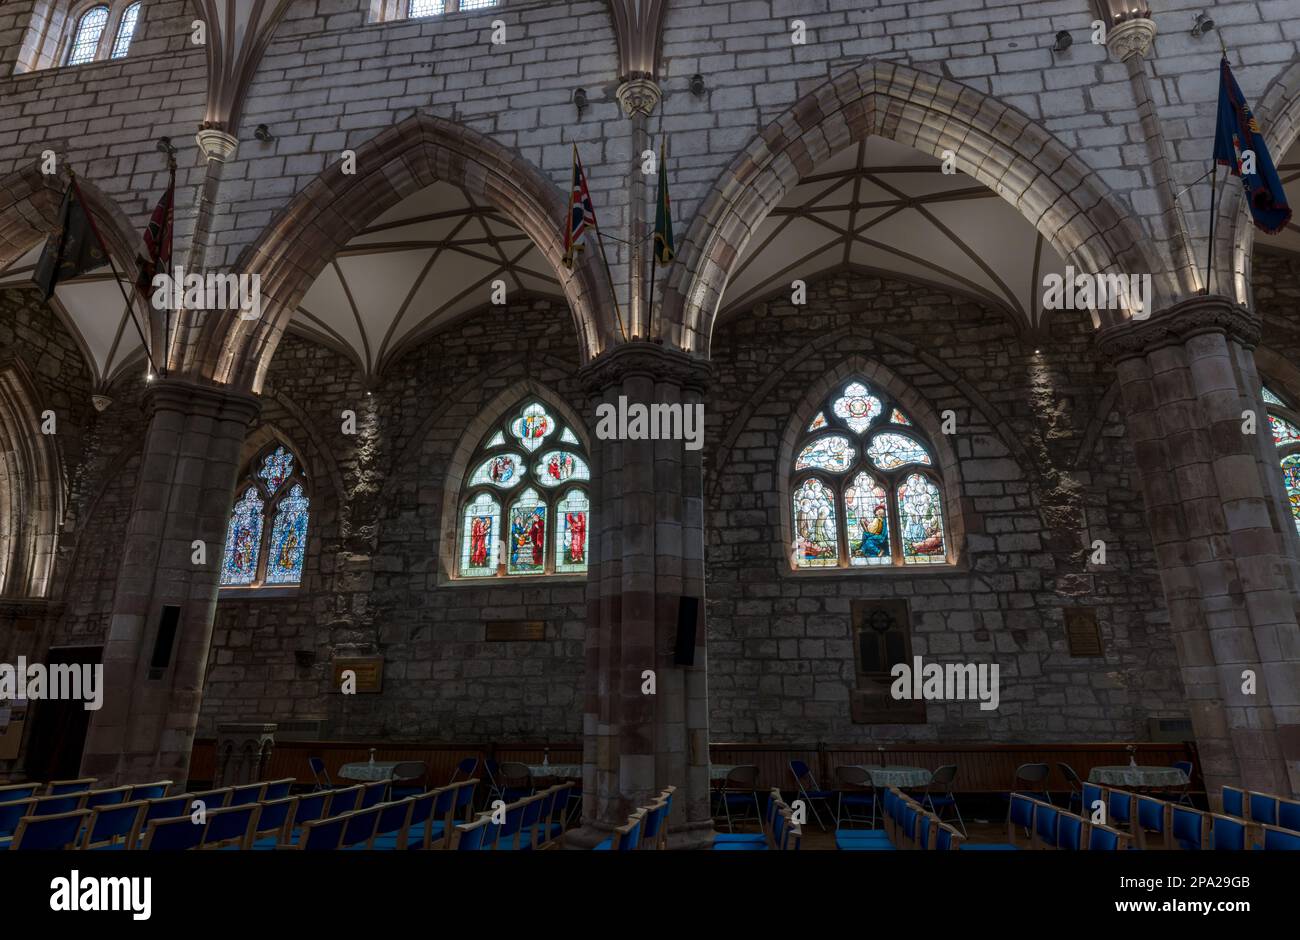 Interior view of stained glass windows, St Mary's Parish Church, Haddington, East Lothian, Scotland, UK Stock Photo